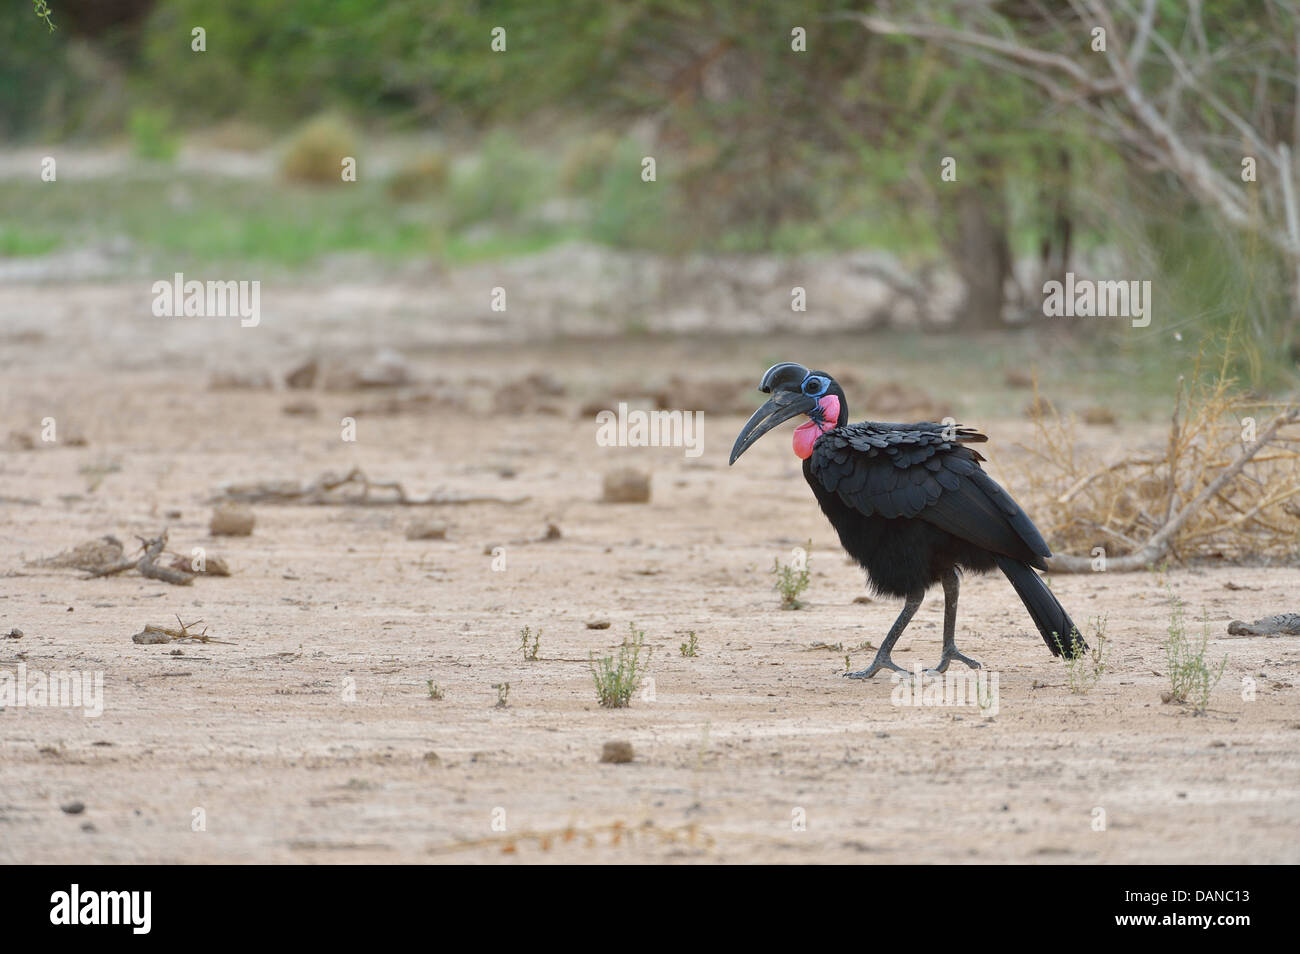 Ground-Hornbill abisinio - Norte (Bucorvus abyssinicus Ground-Hornbill) buscando comida en el suelo Foto de stock